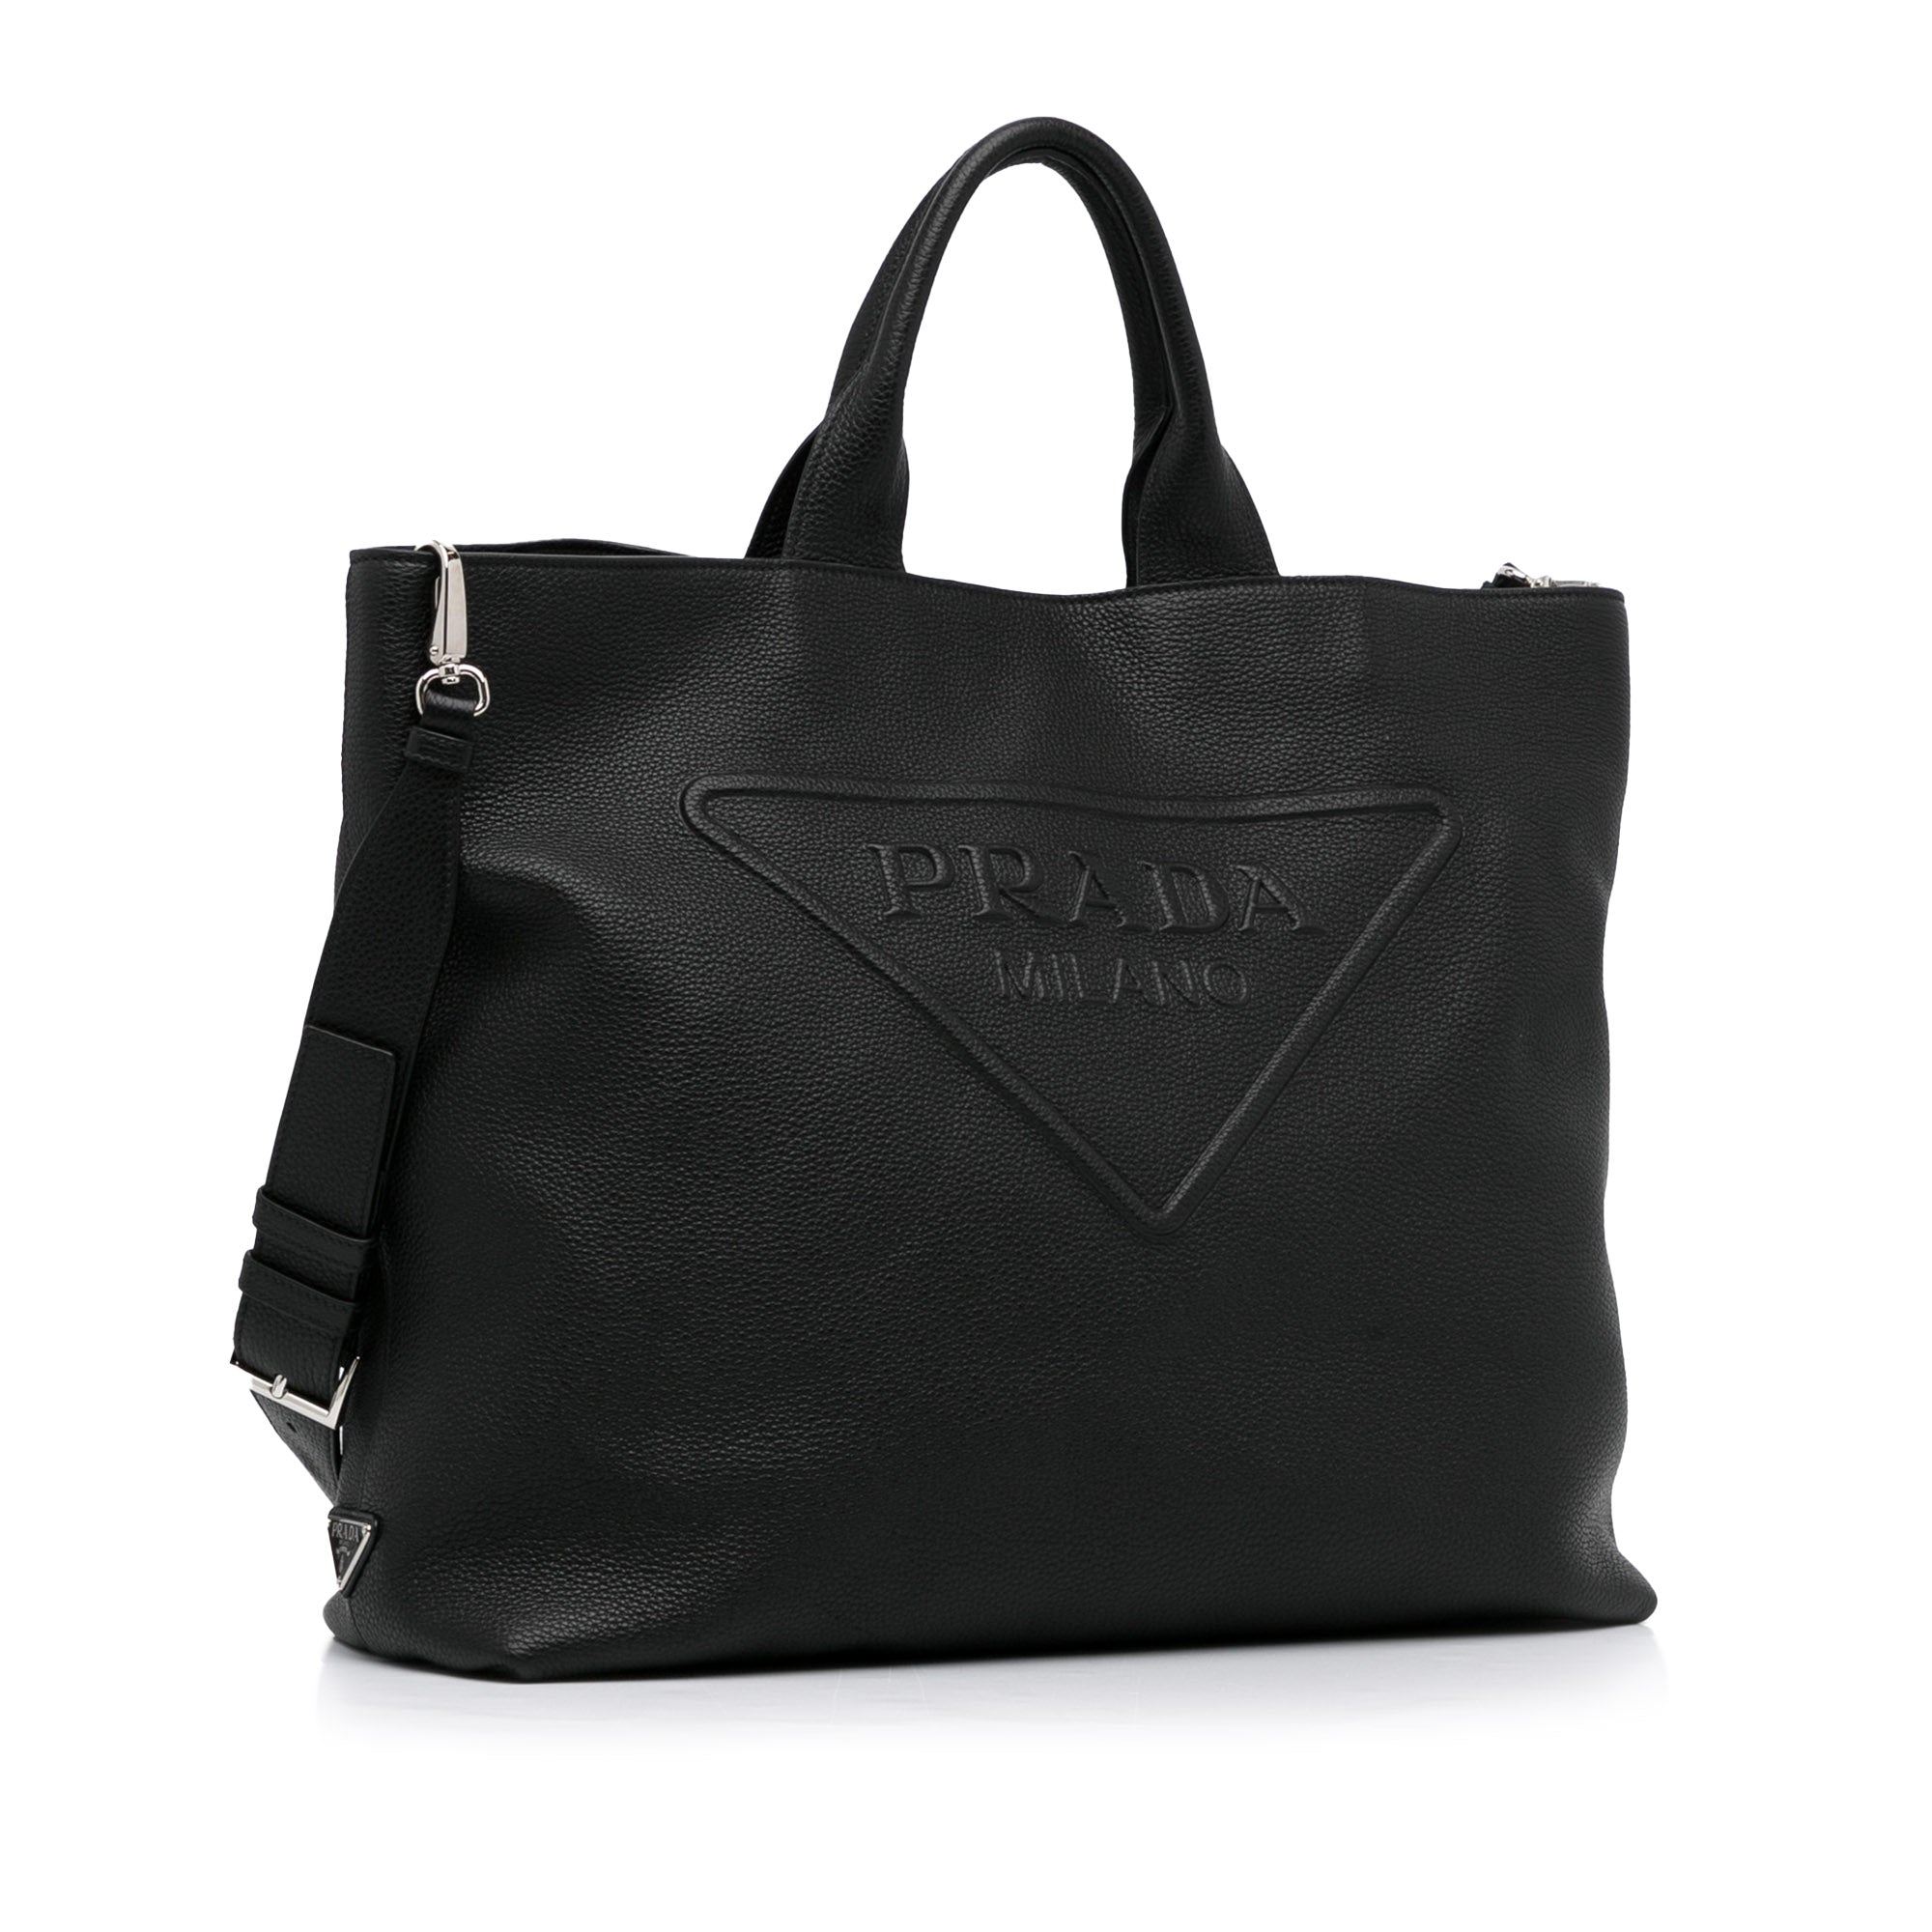 Prada - Authenticated Saffiano Handbag - Leather Black Plain for Women, Never Worn, with Tag